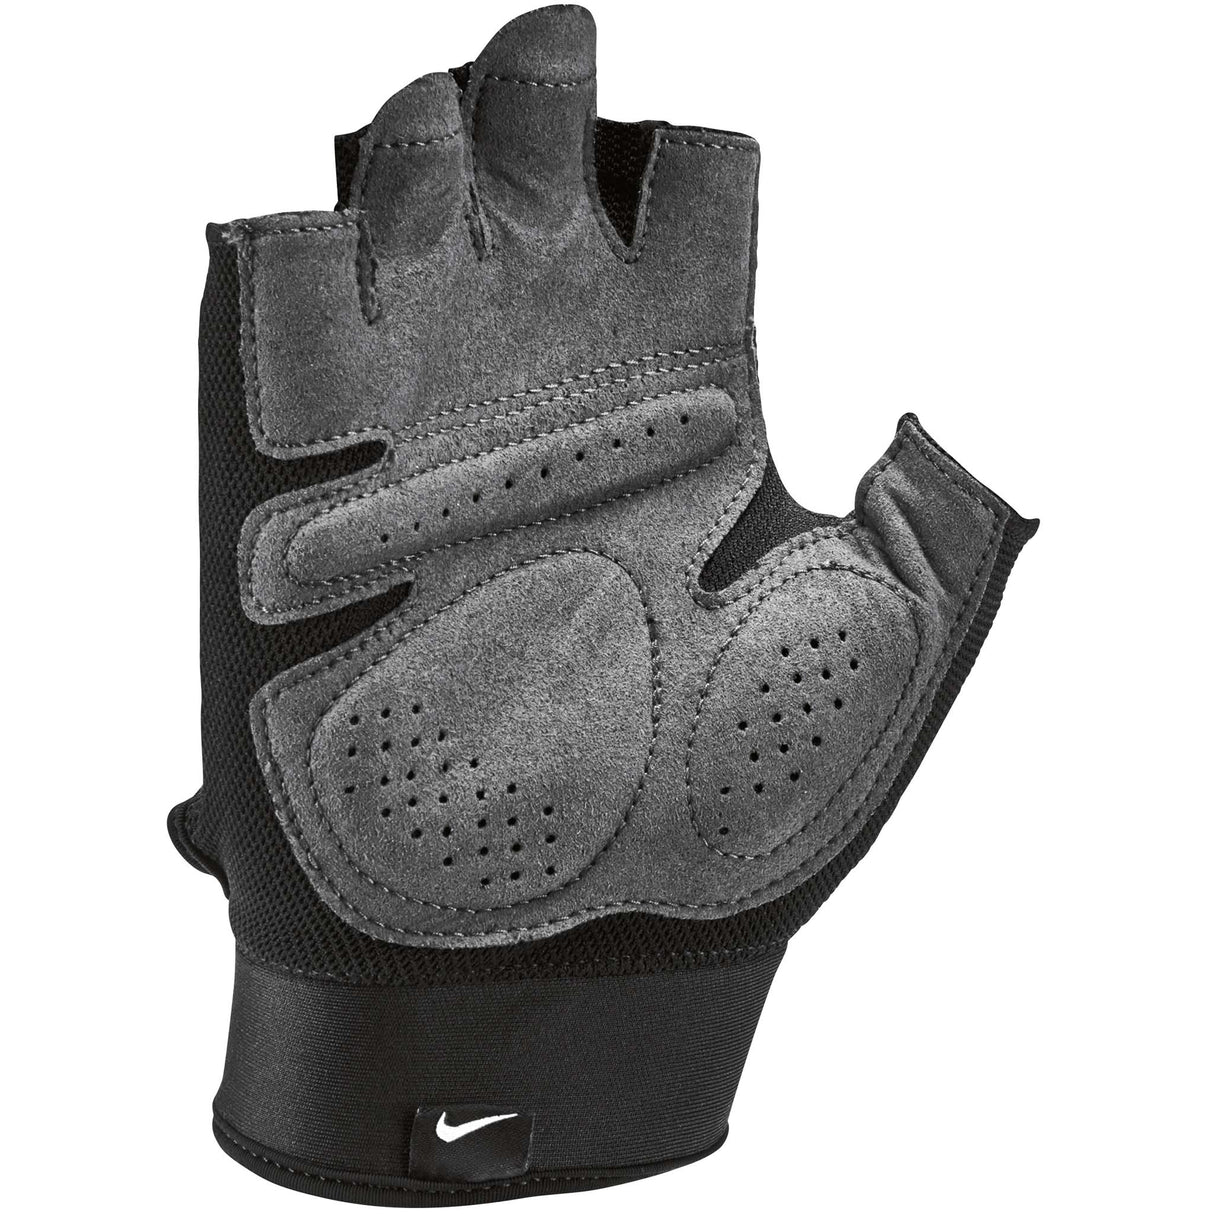 Nike Extreme Fitness Gloves gants d'entraînement et musculation homme paume